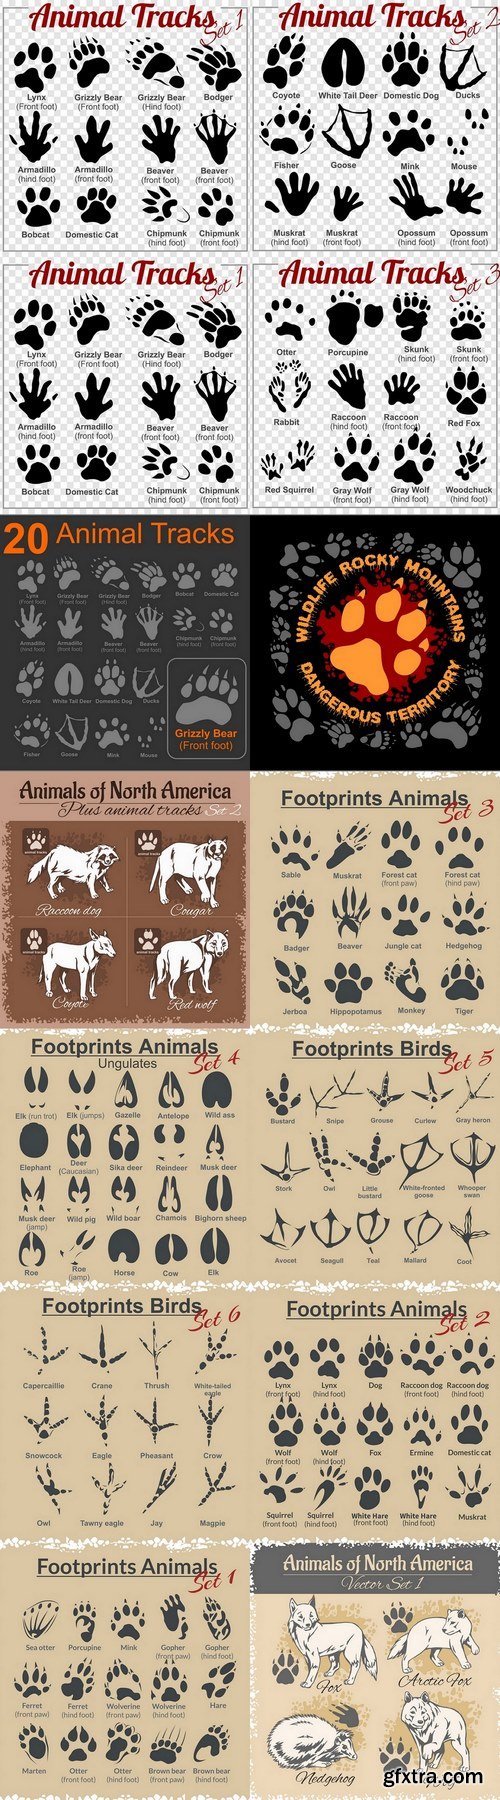 Animals and animal tracks, footprints 4